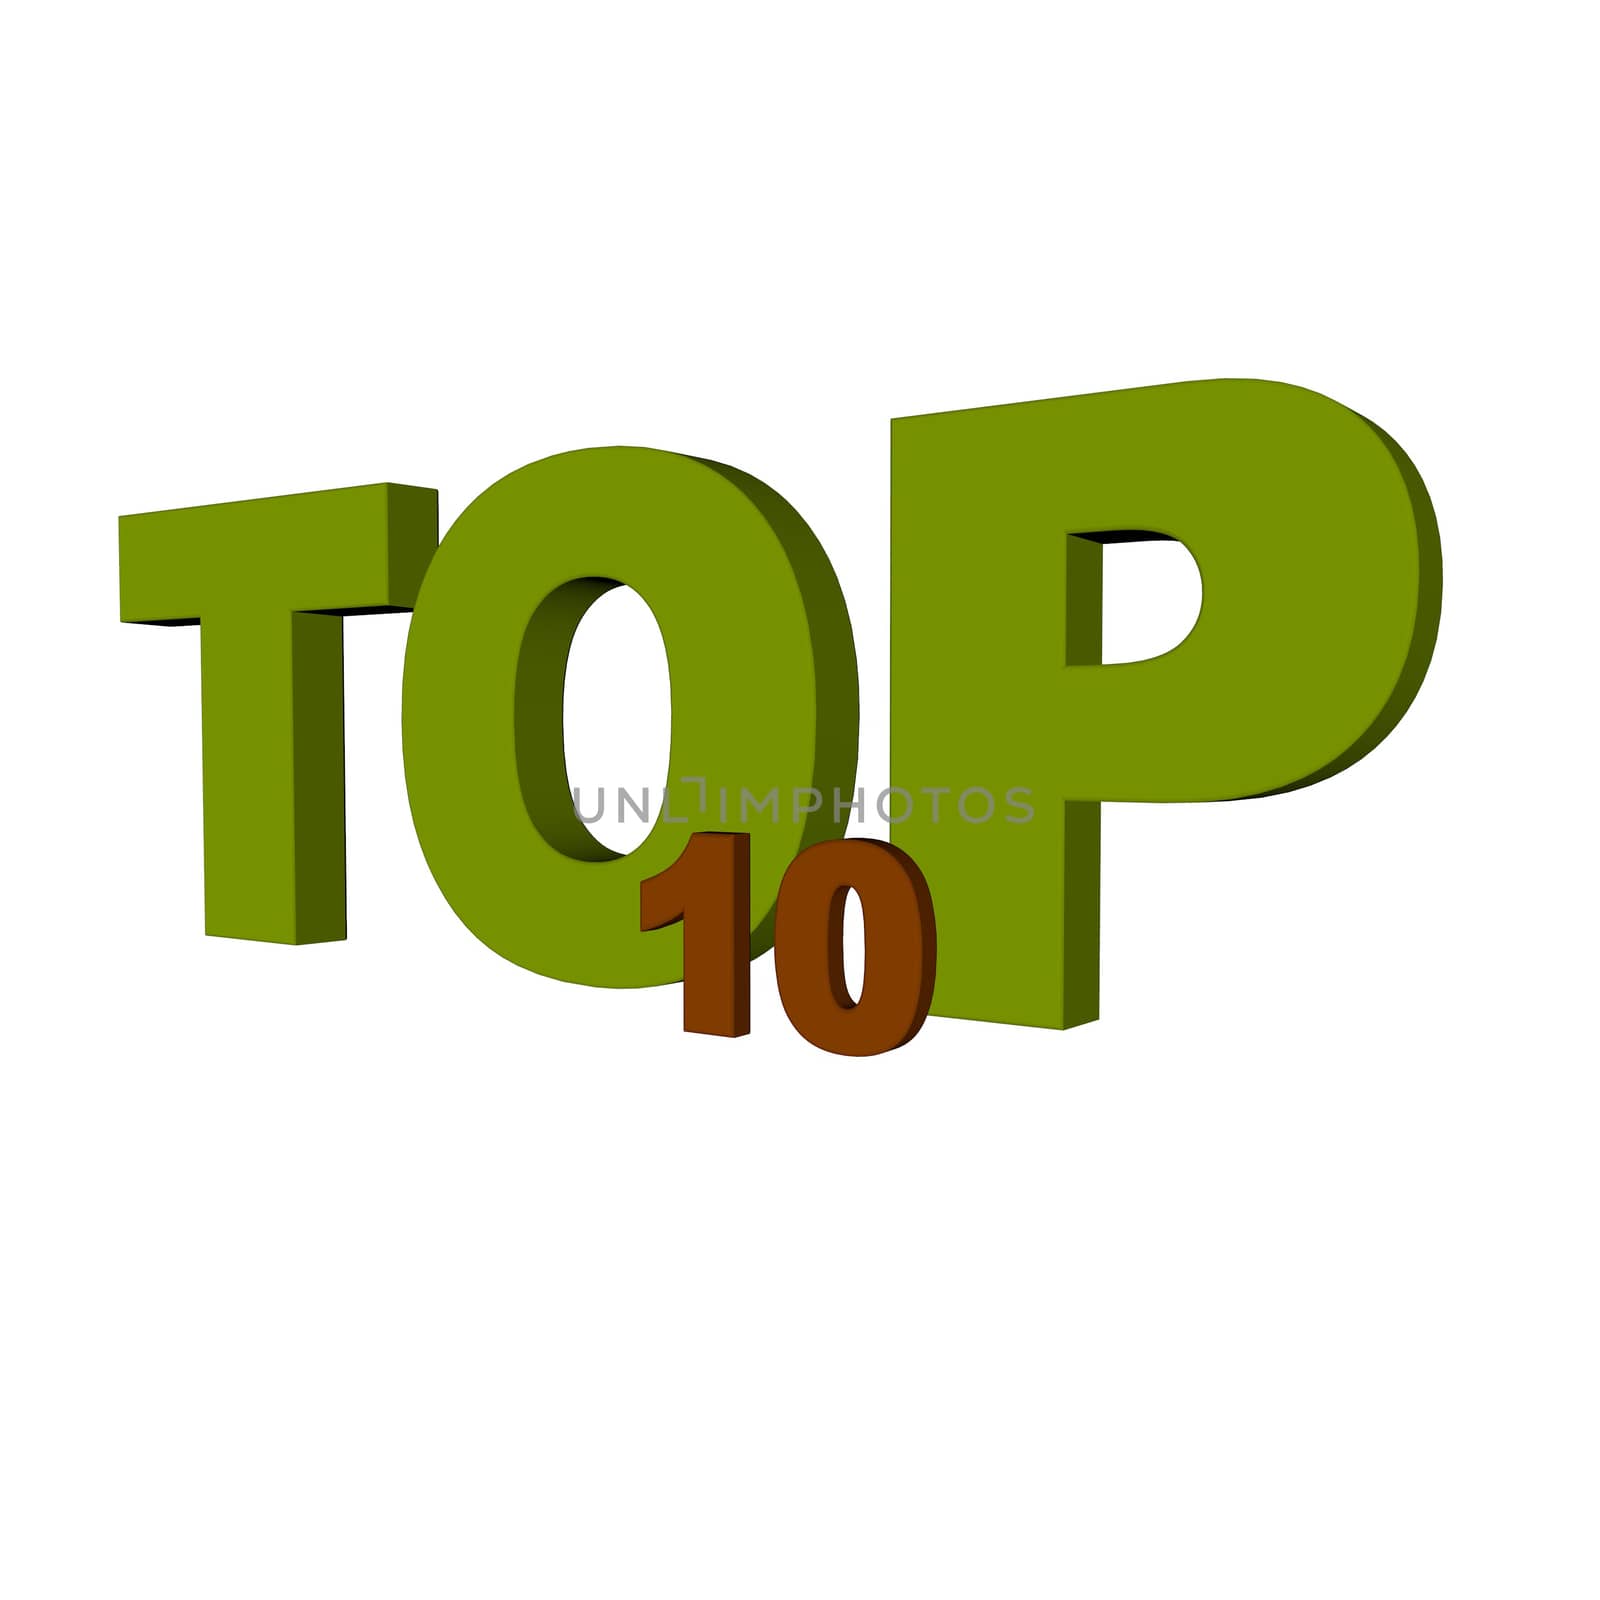 Top 10 by xizang